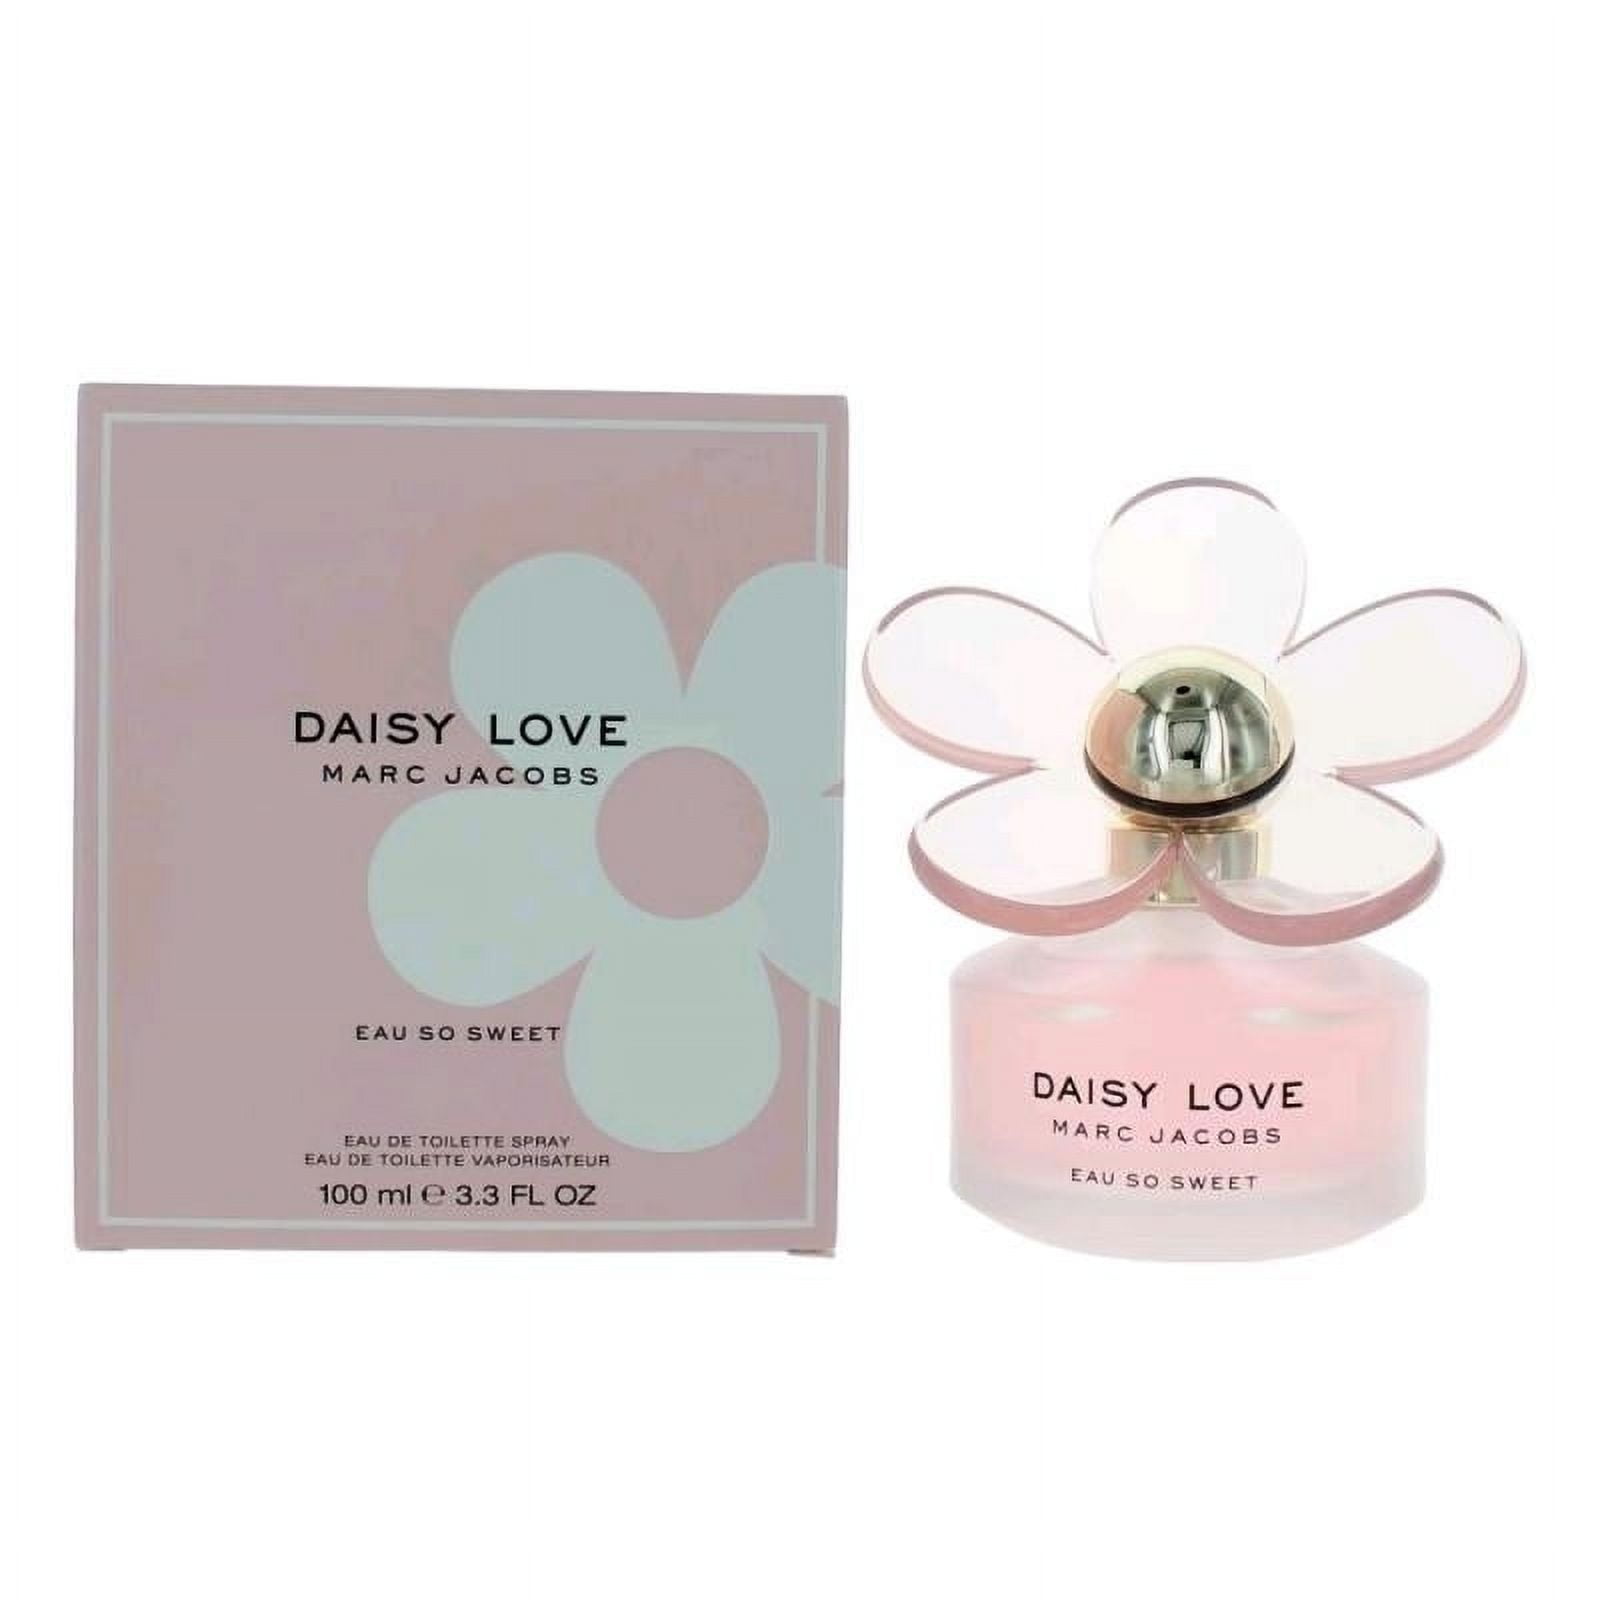 Marc Jacobs Daisy Love Eau So Sweet Eau de Toilette, Perfume for